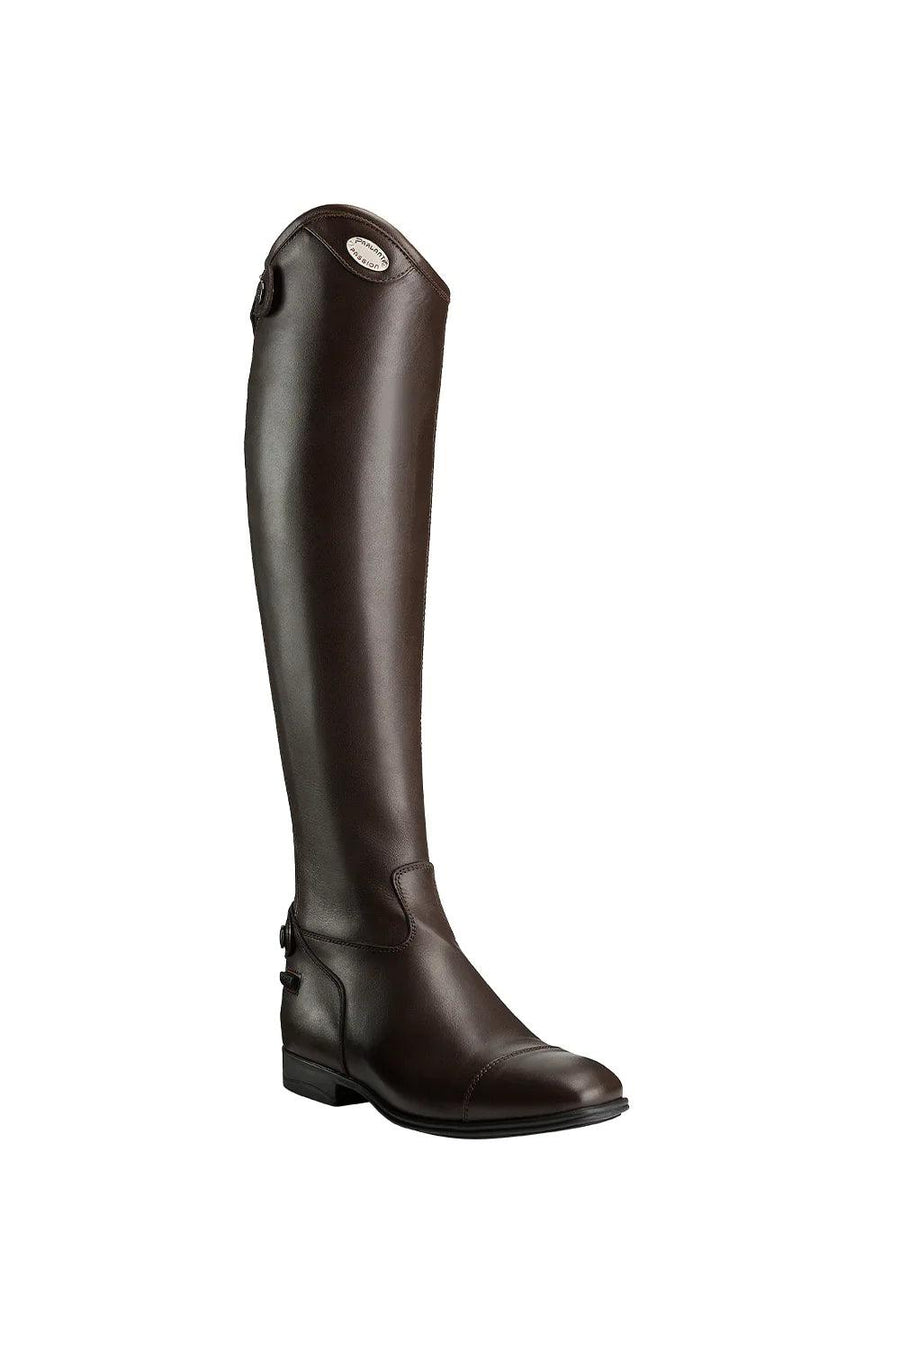 Parlanti brown aspen pro boots - HorseworldEU